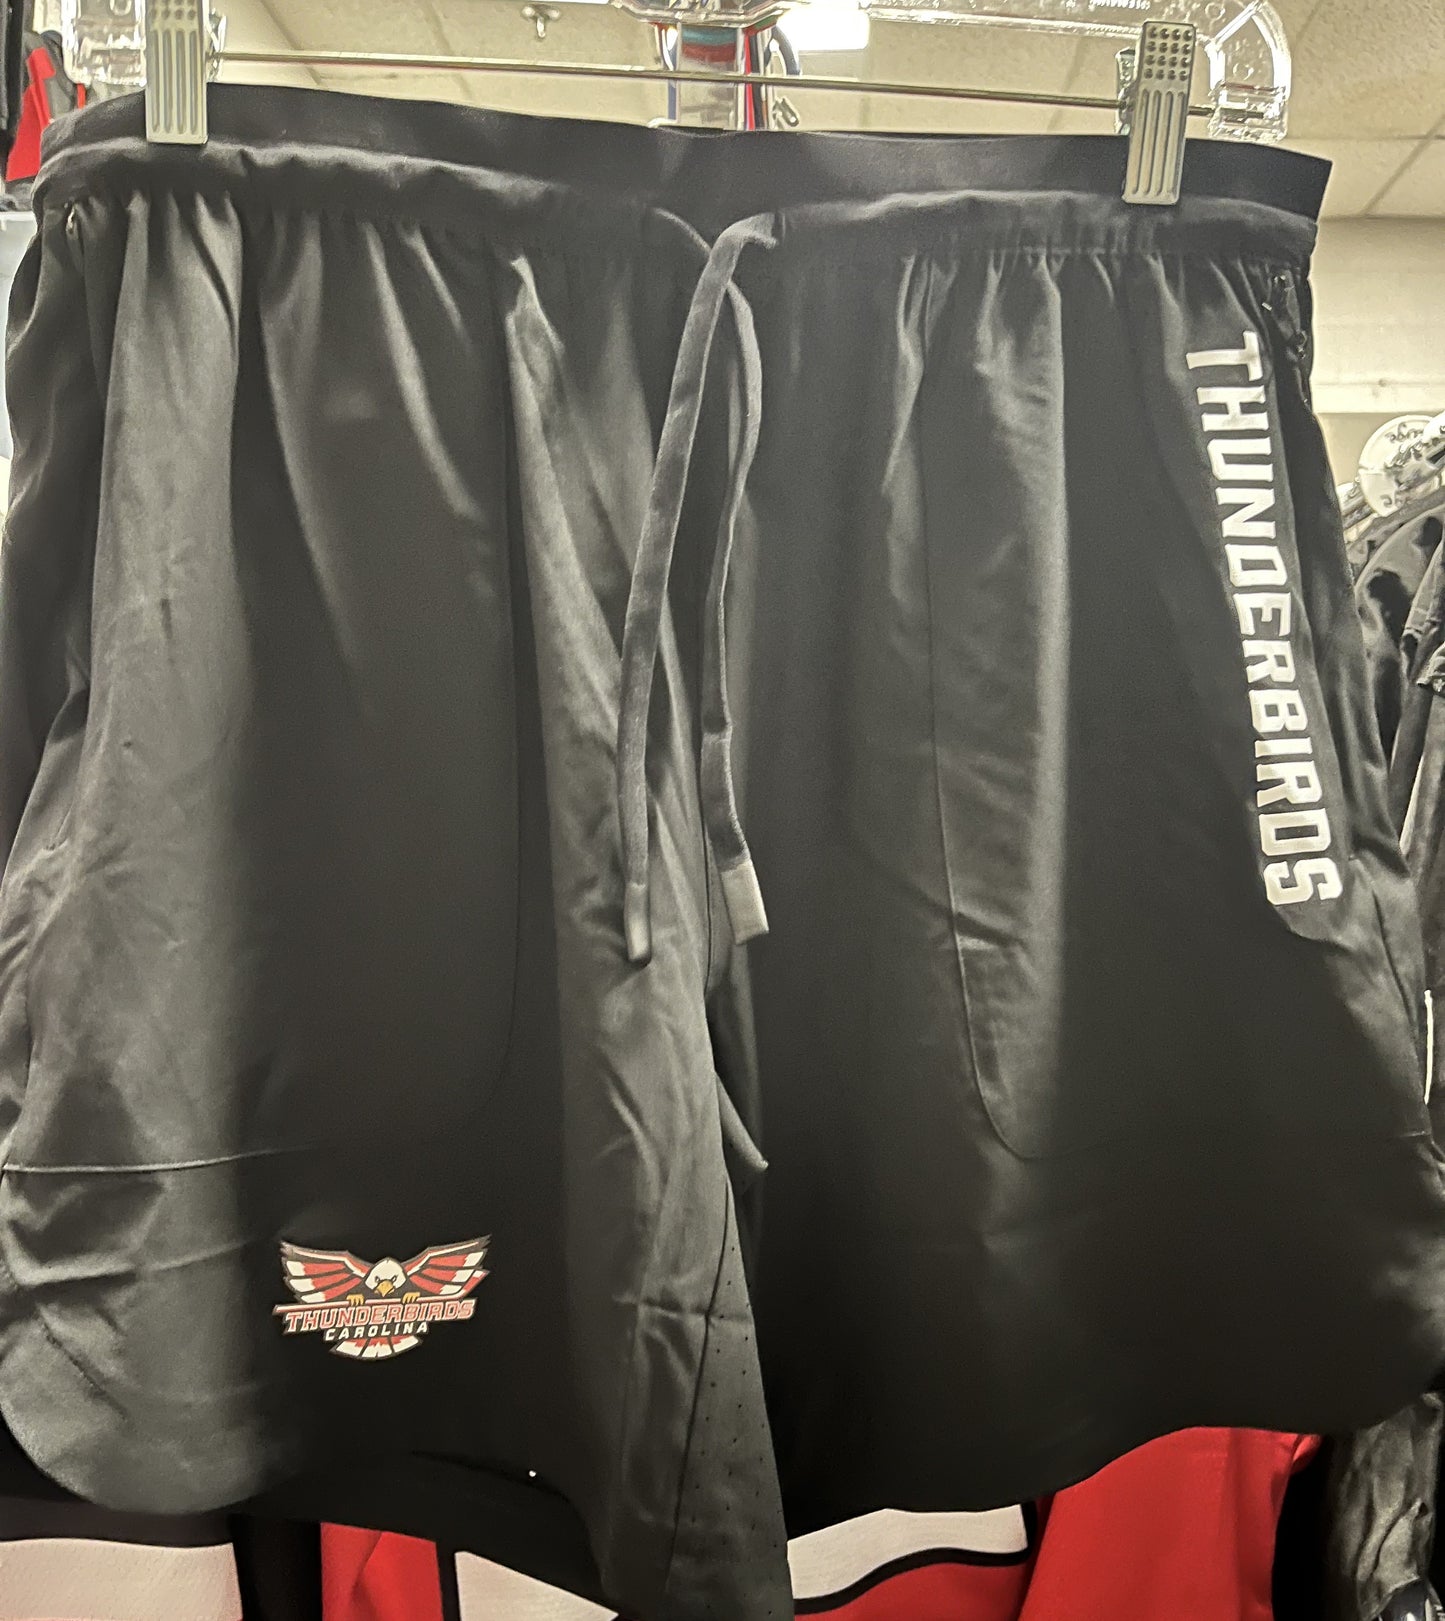 Shorts w/Thunderbird logo